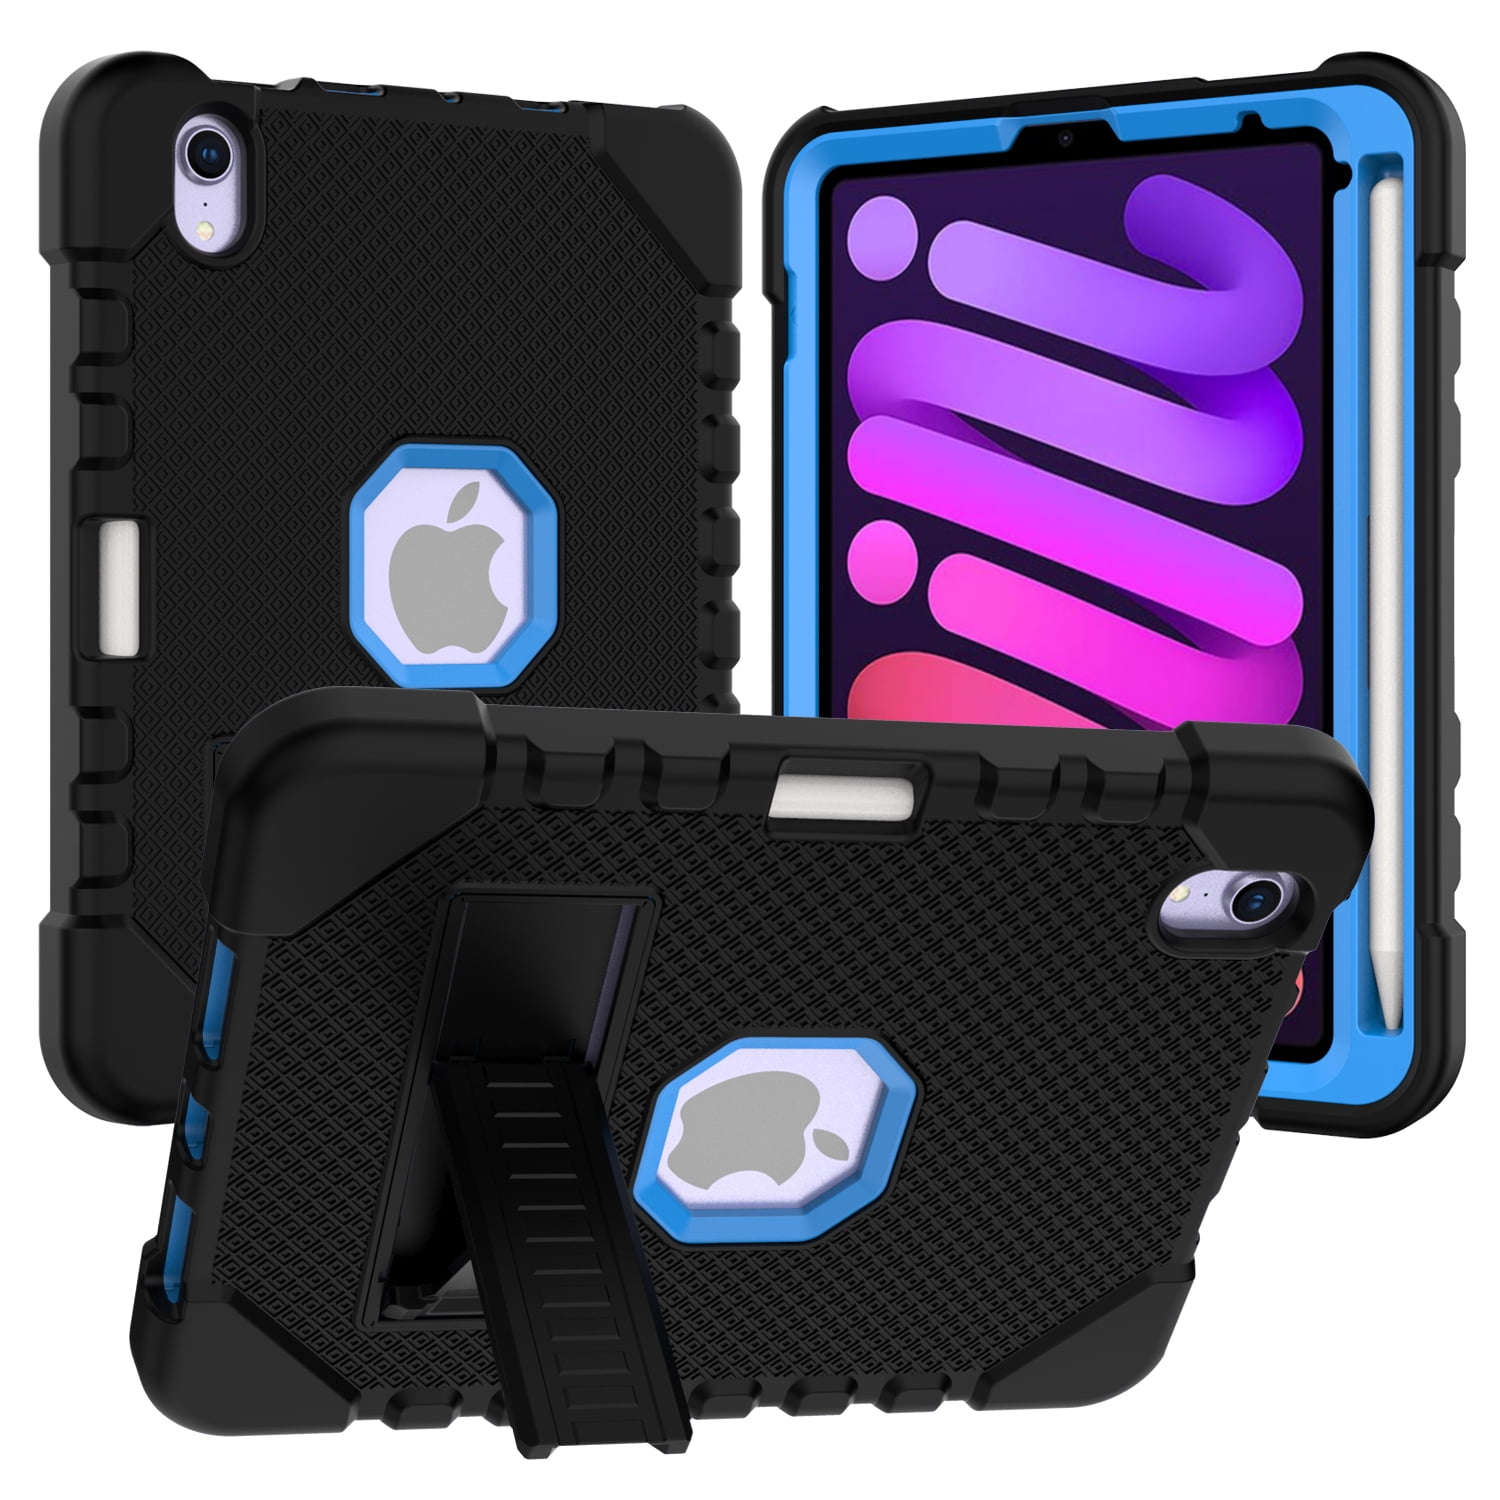 Ipad Mini 6 Shockproof Case, Ipad Mini 6 Protective Case